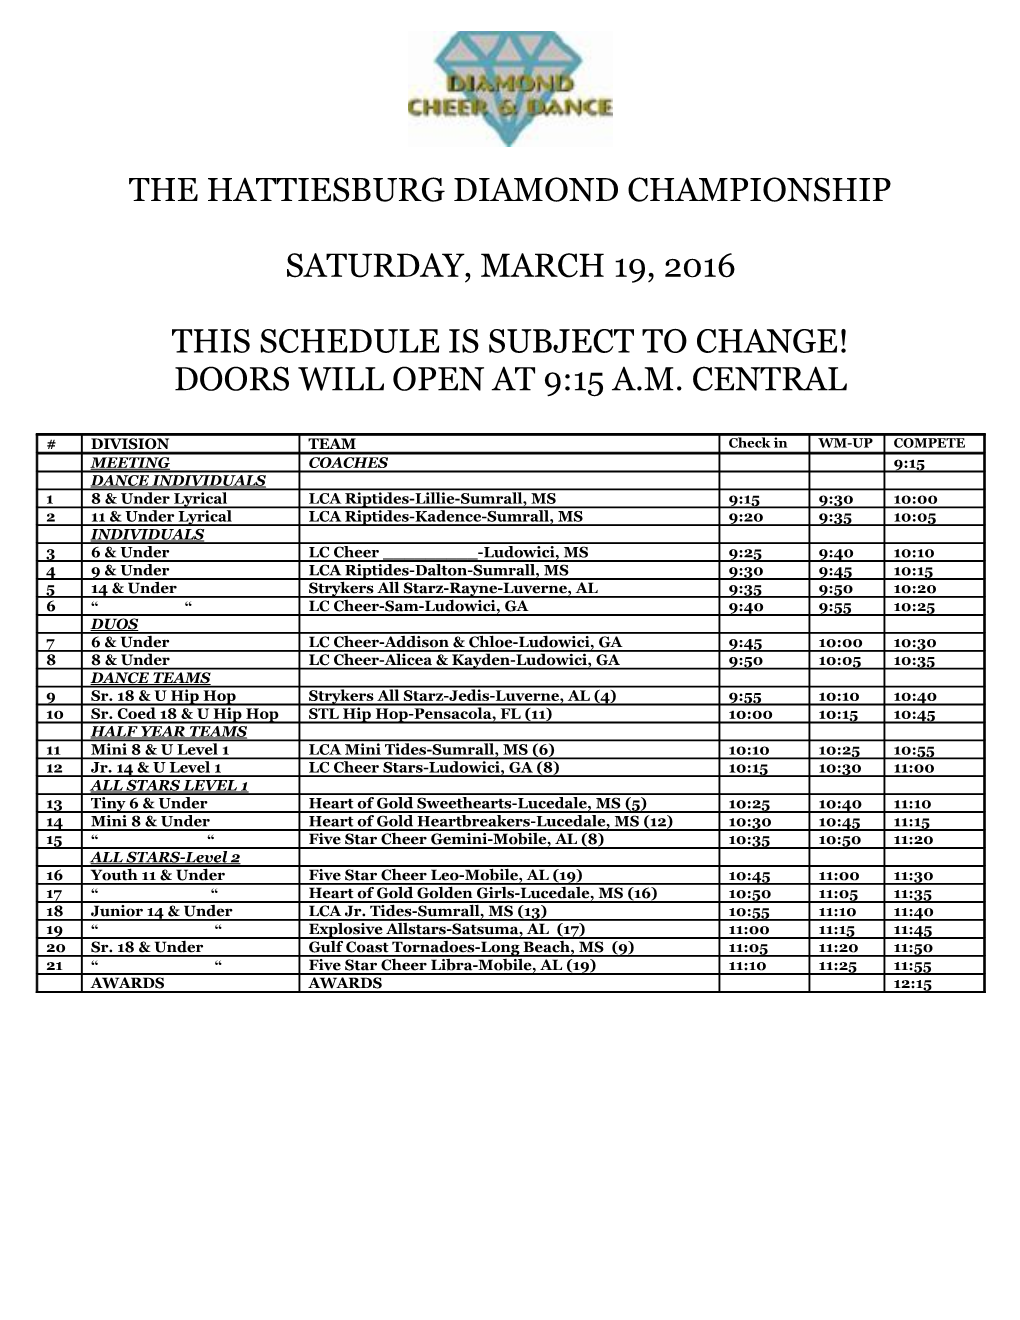 The Hattiesburg Diamond Championship